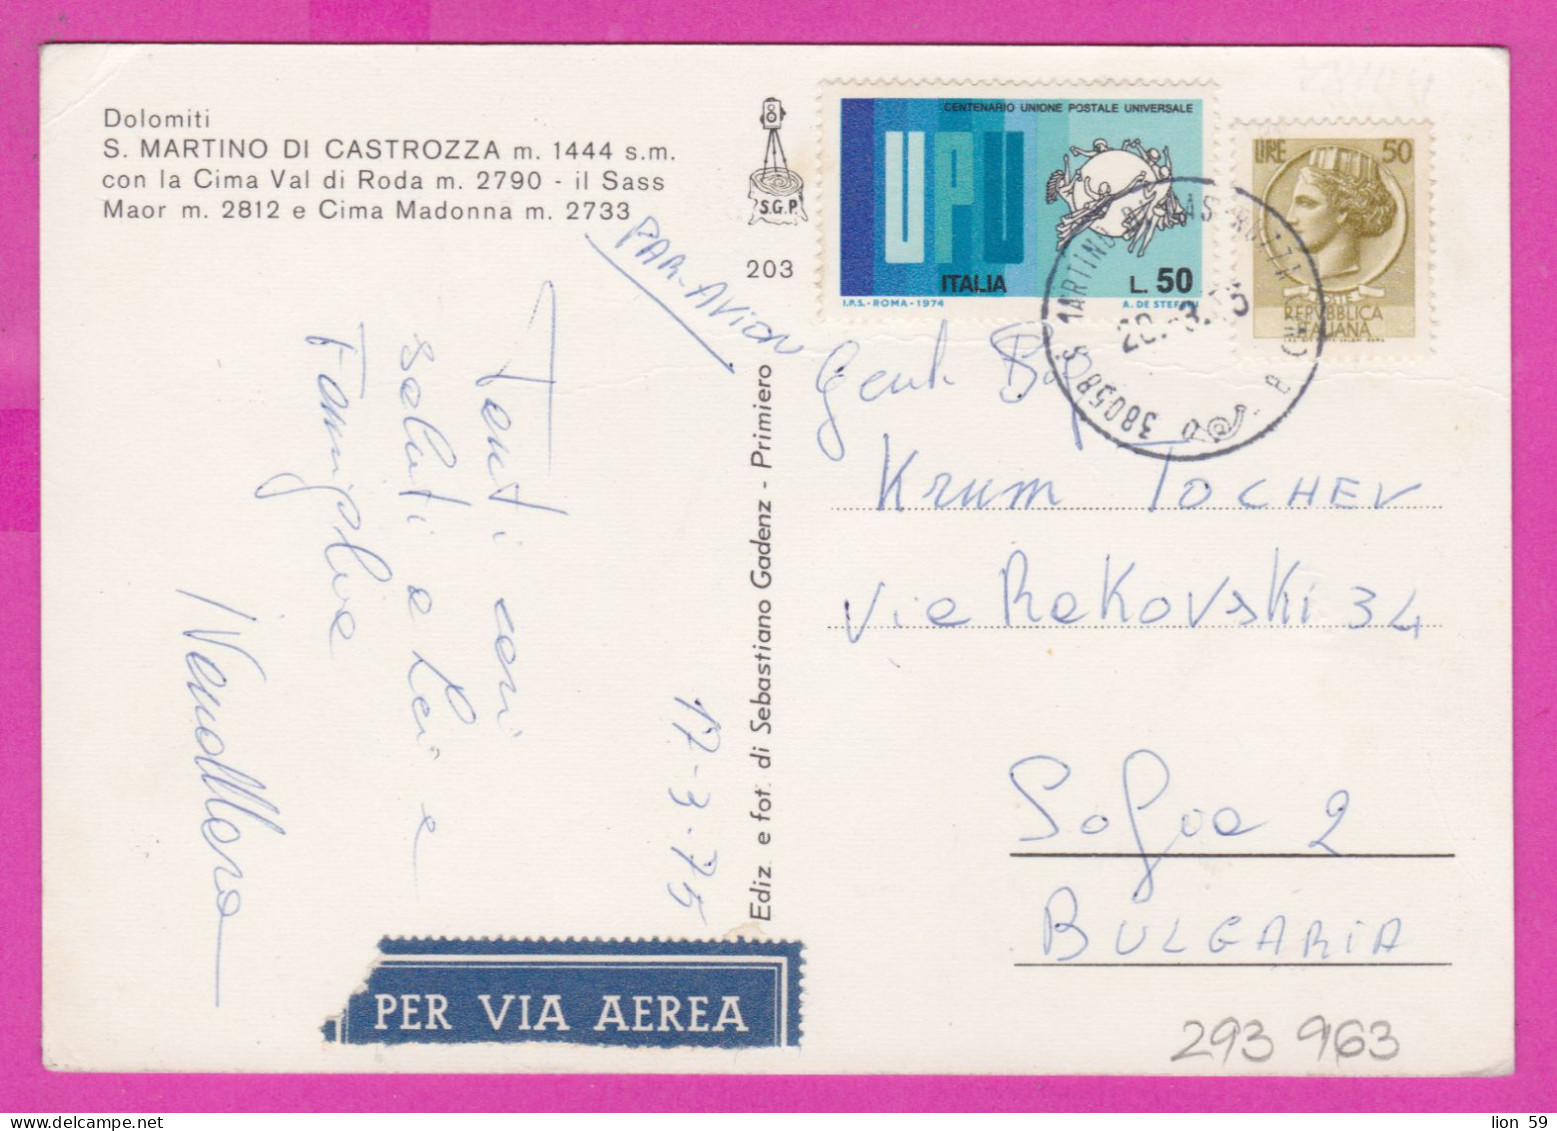 293963 / Italy - Dolomiti S. MARTINO DI CASTROZZA   PC 1975 Per Via Aerea USED 50+50 L Coin Of Syracuse UPU U.P.U. - 1971-80: Marcophilie